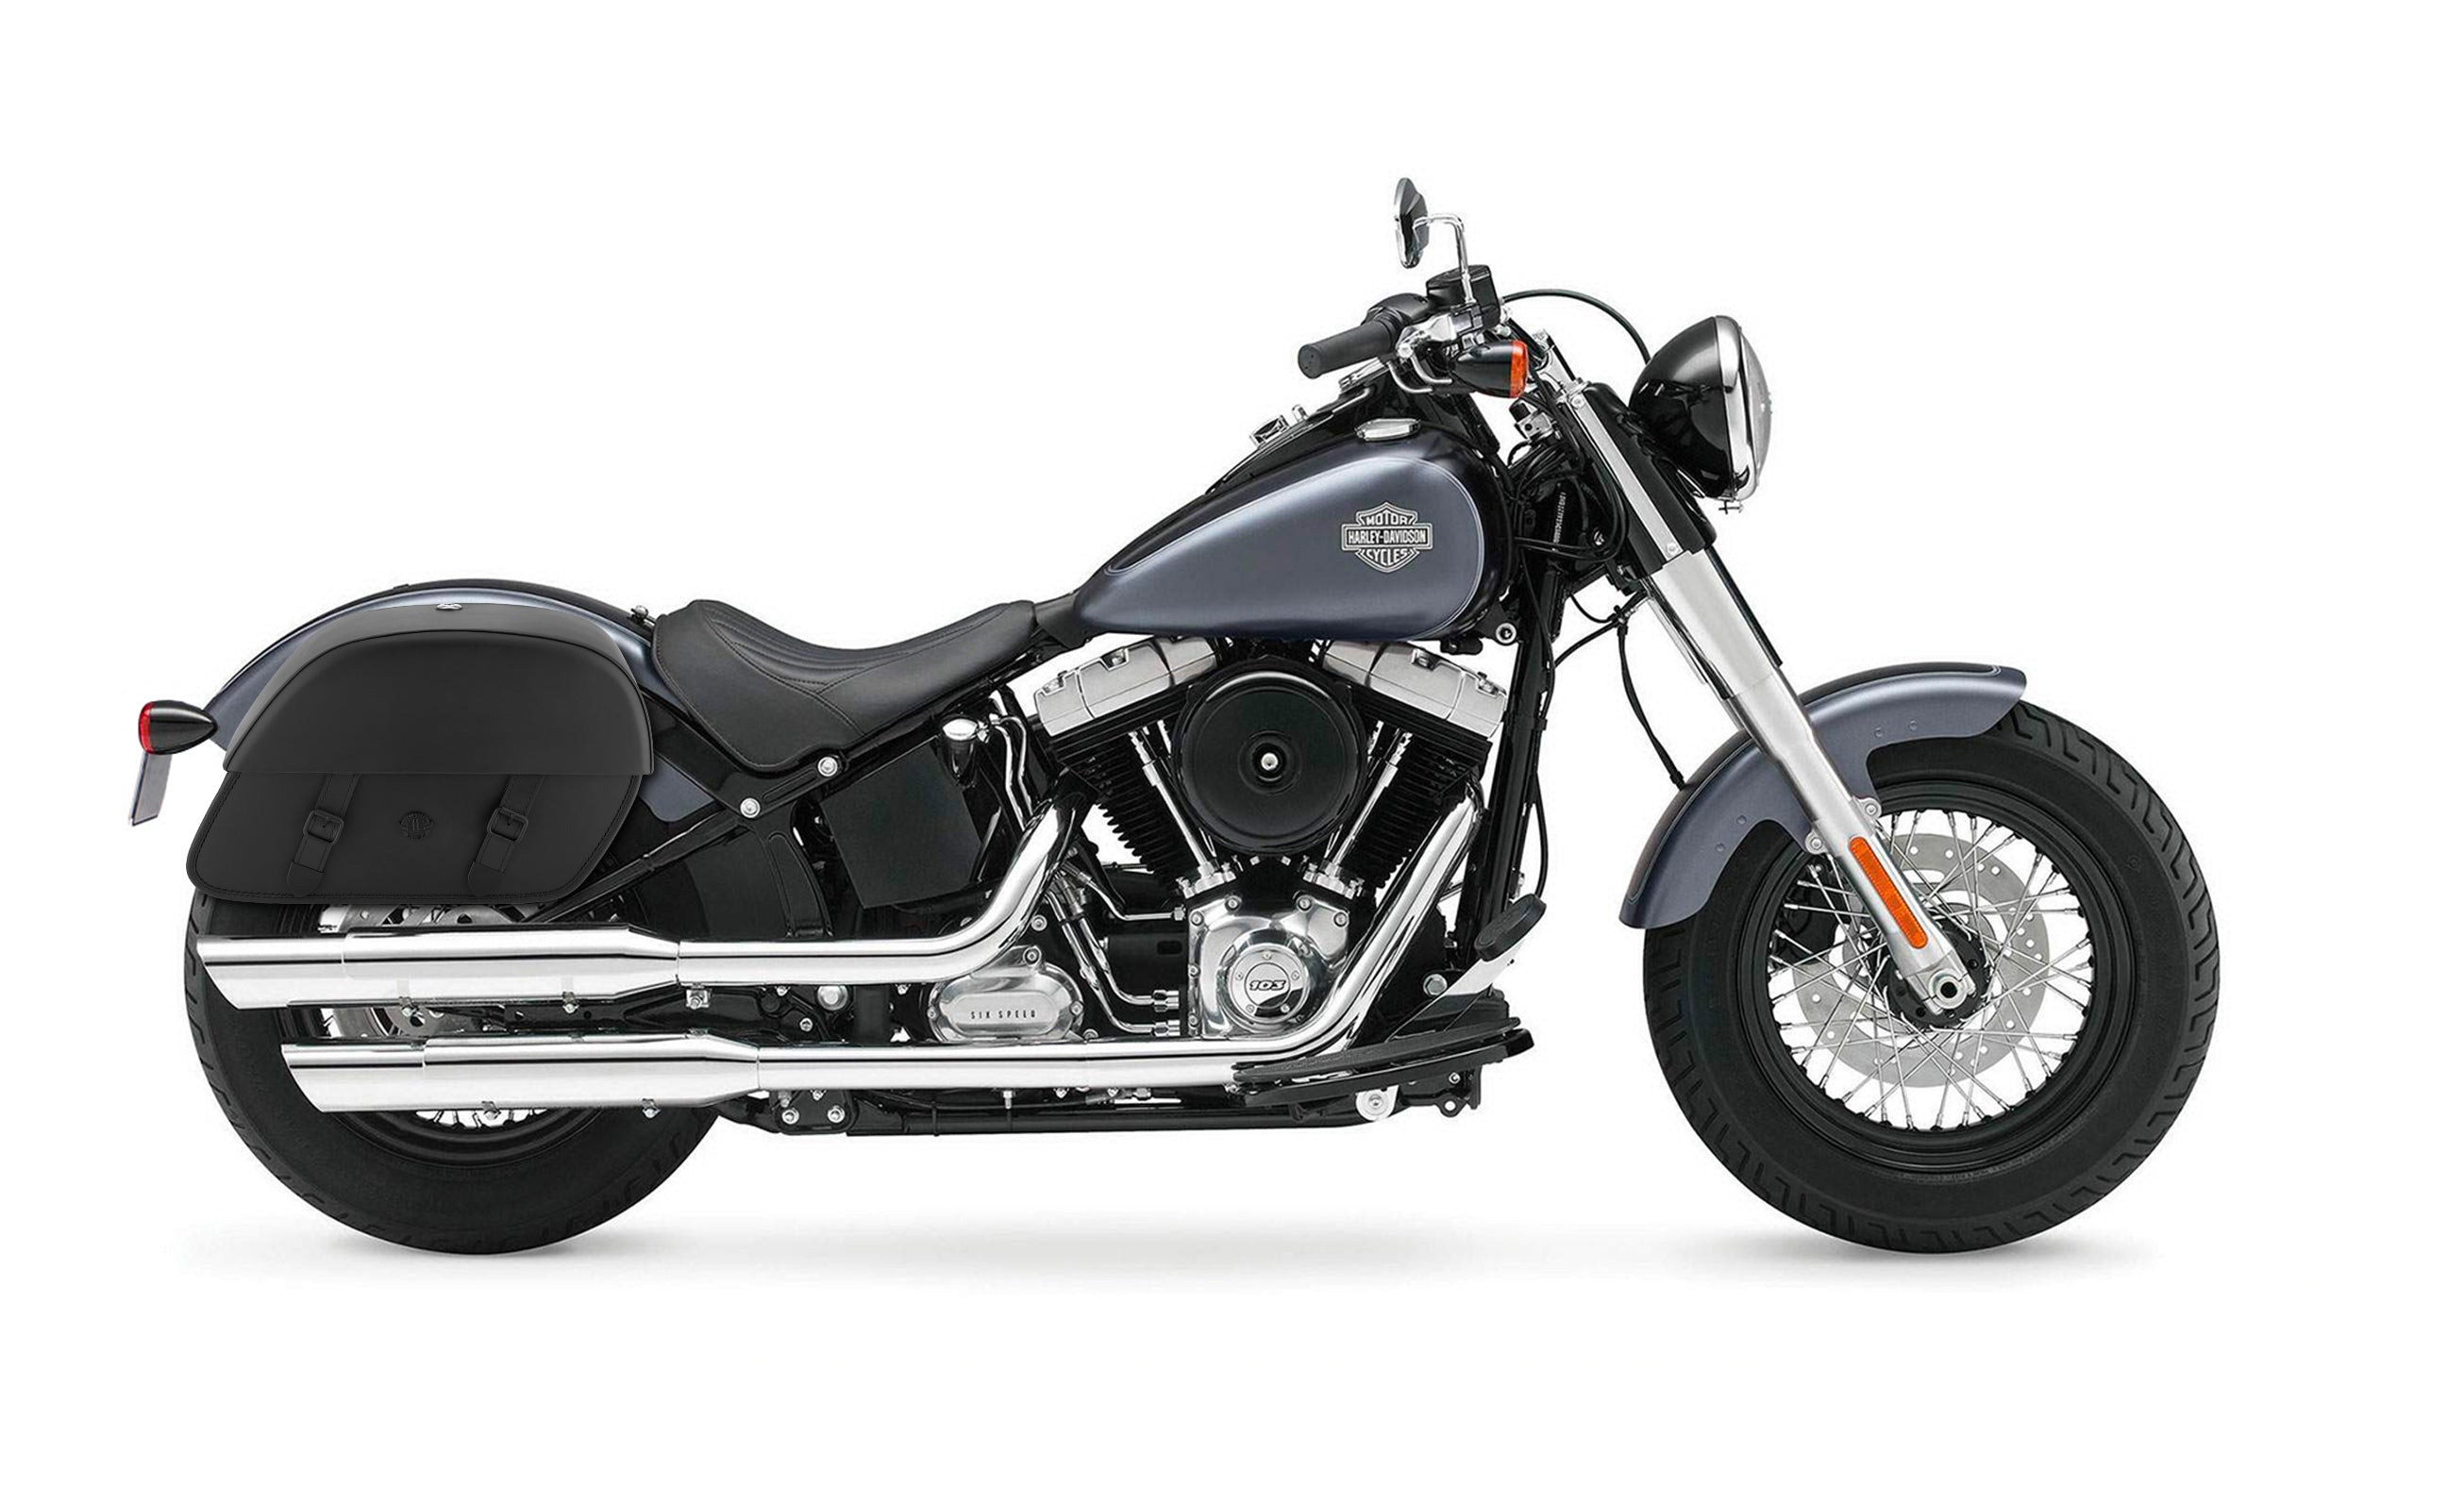 28L - Baelor Medium Motorcycle Saddlebags for Harley Softail Slim FLS @expand